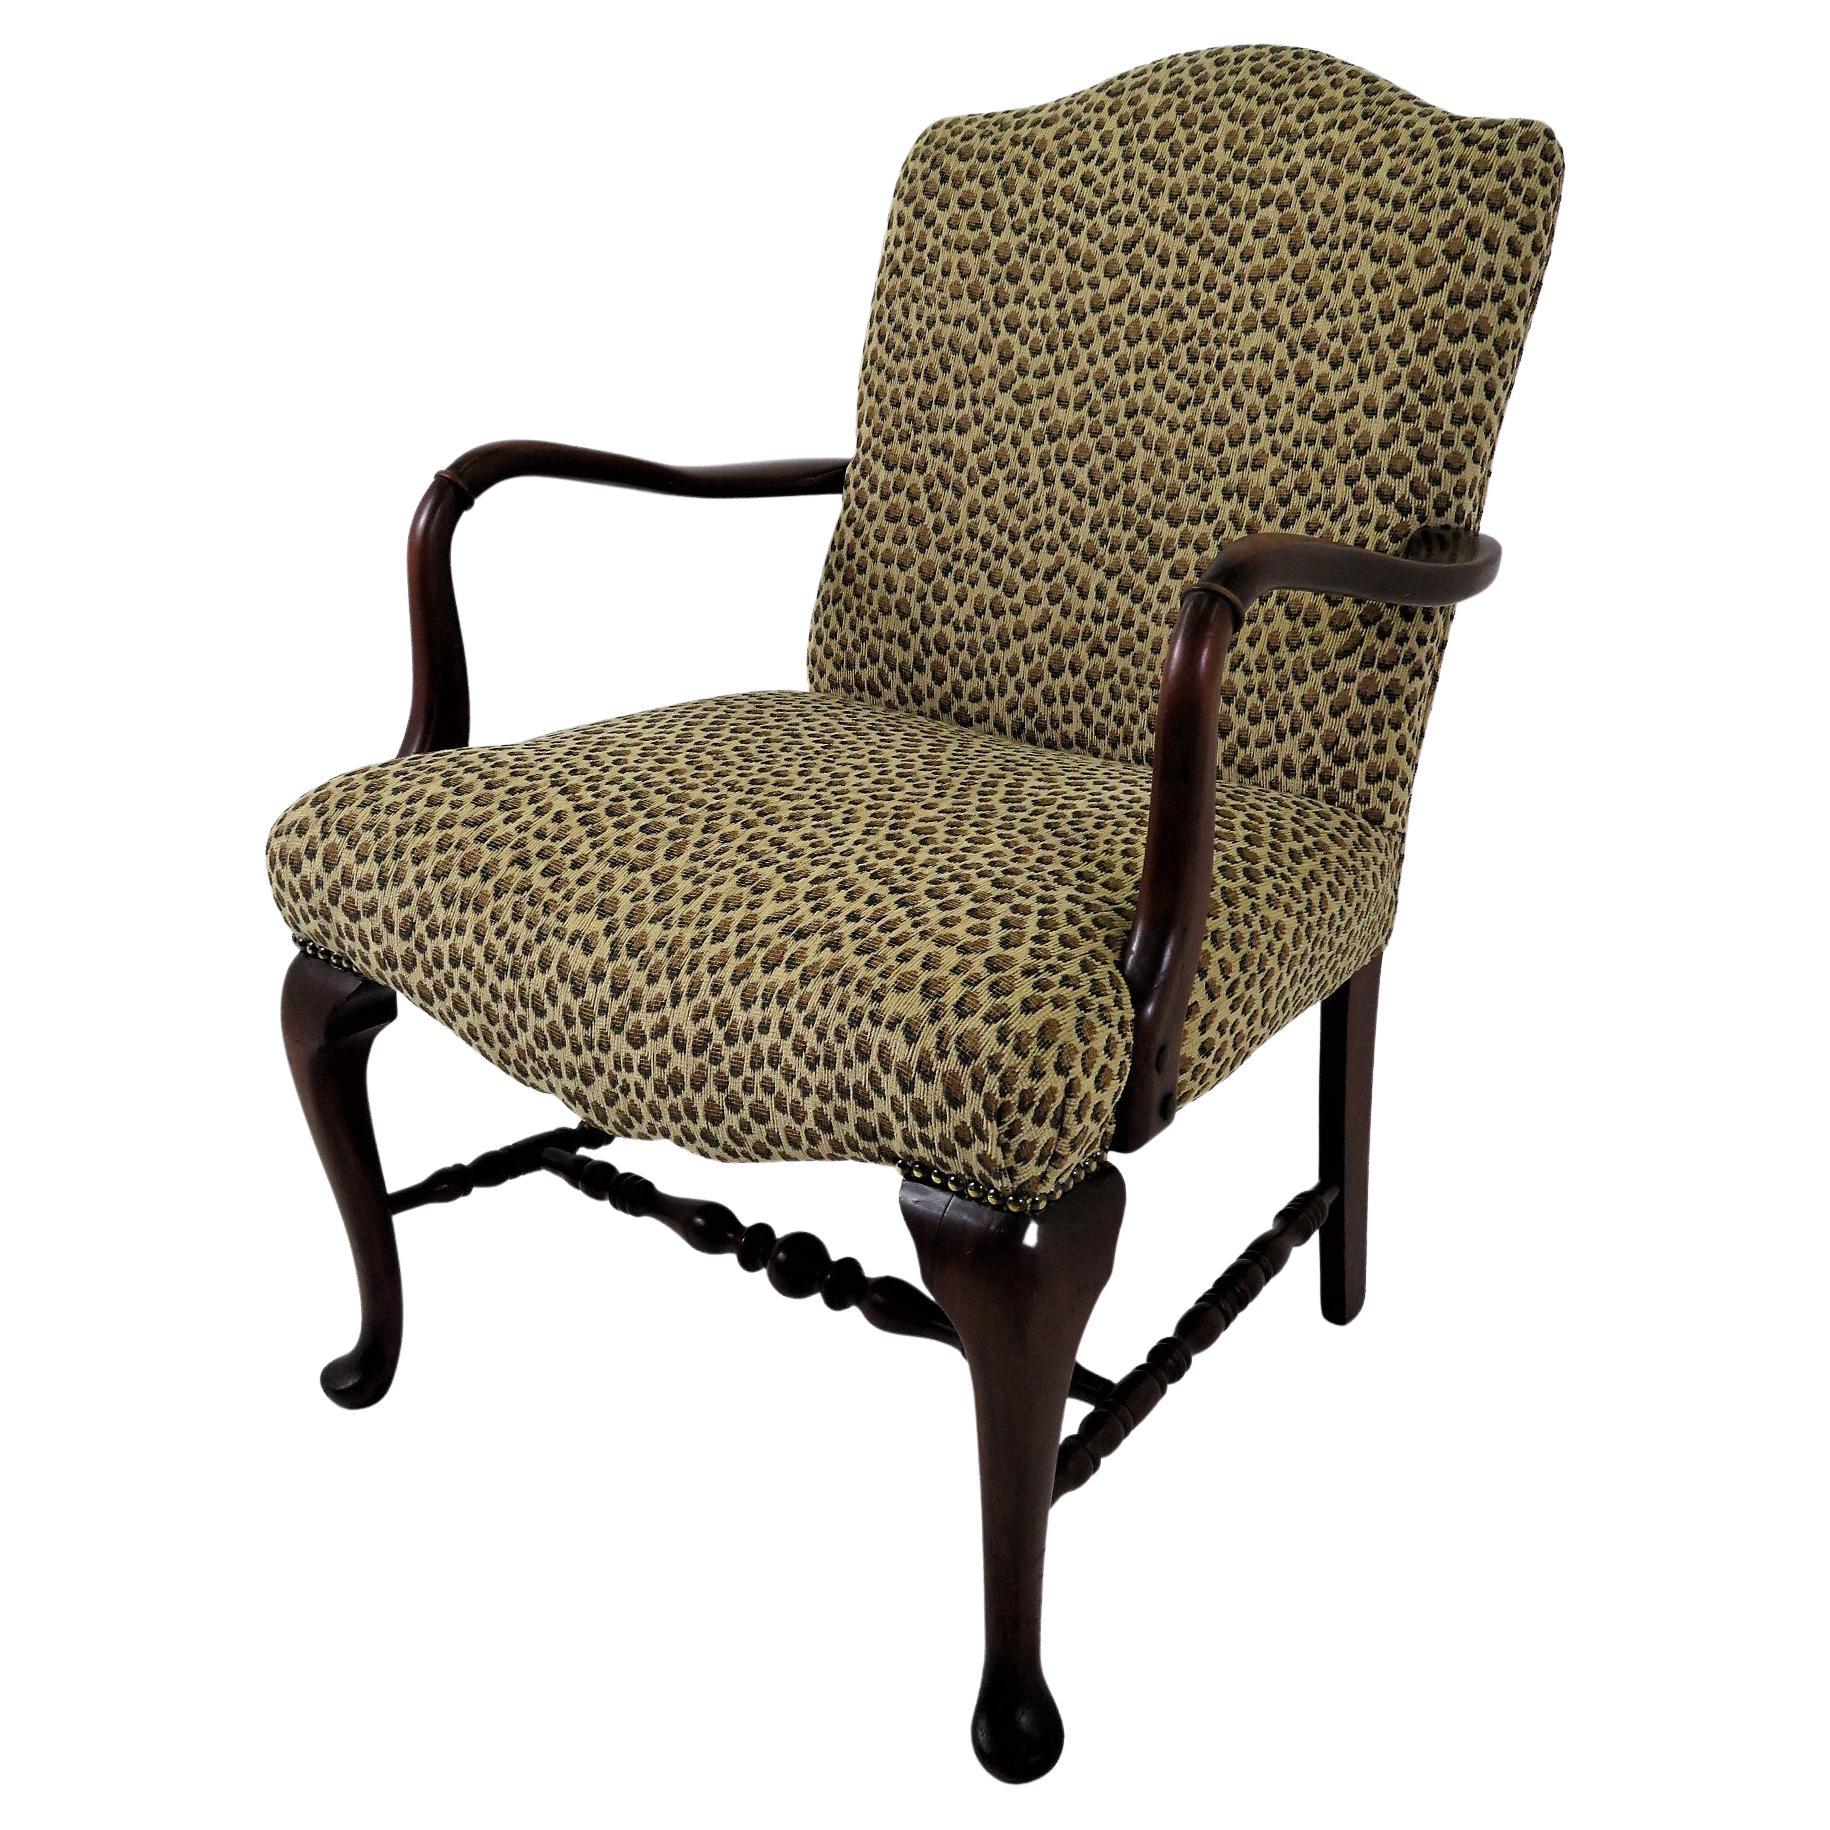 1940s American Queen Anne Style Armchair in Leopard